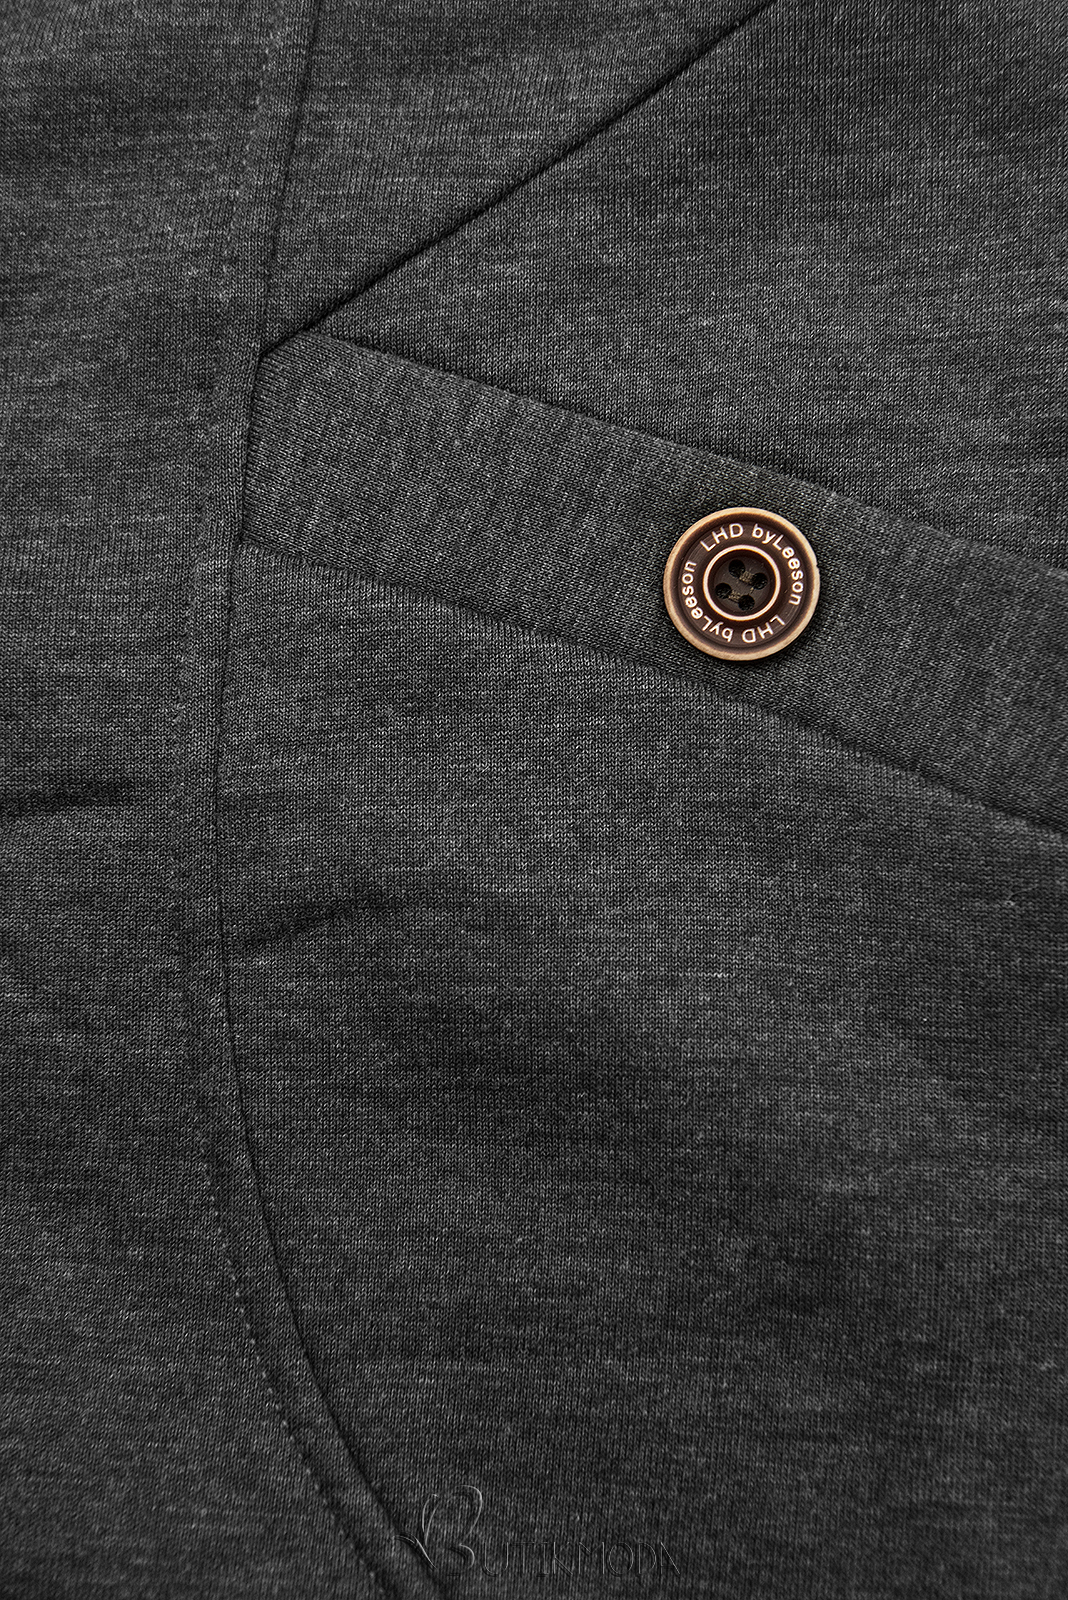 Dark gray sweatshirt with patterned hood lining